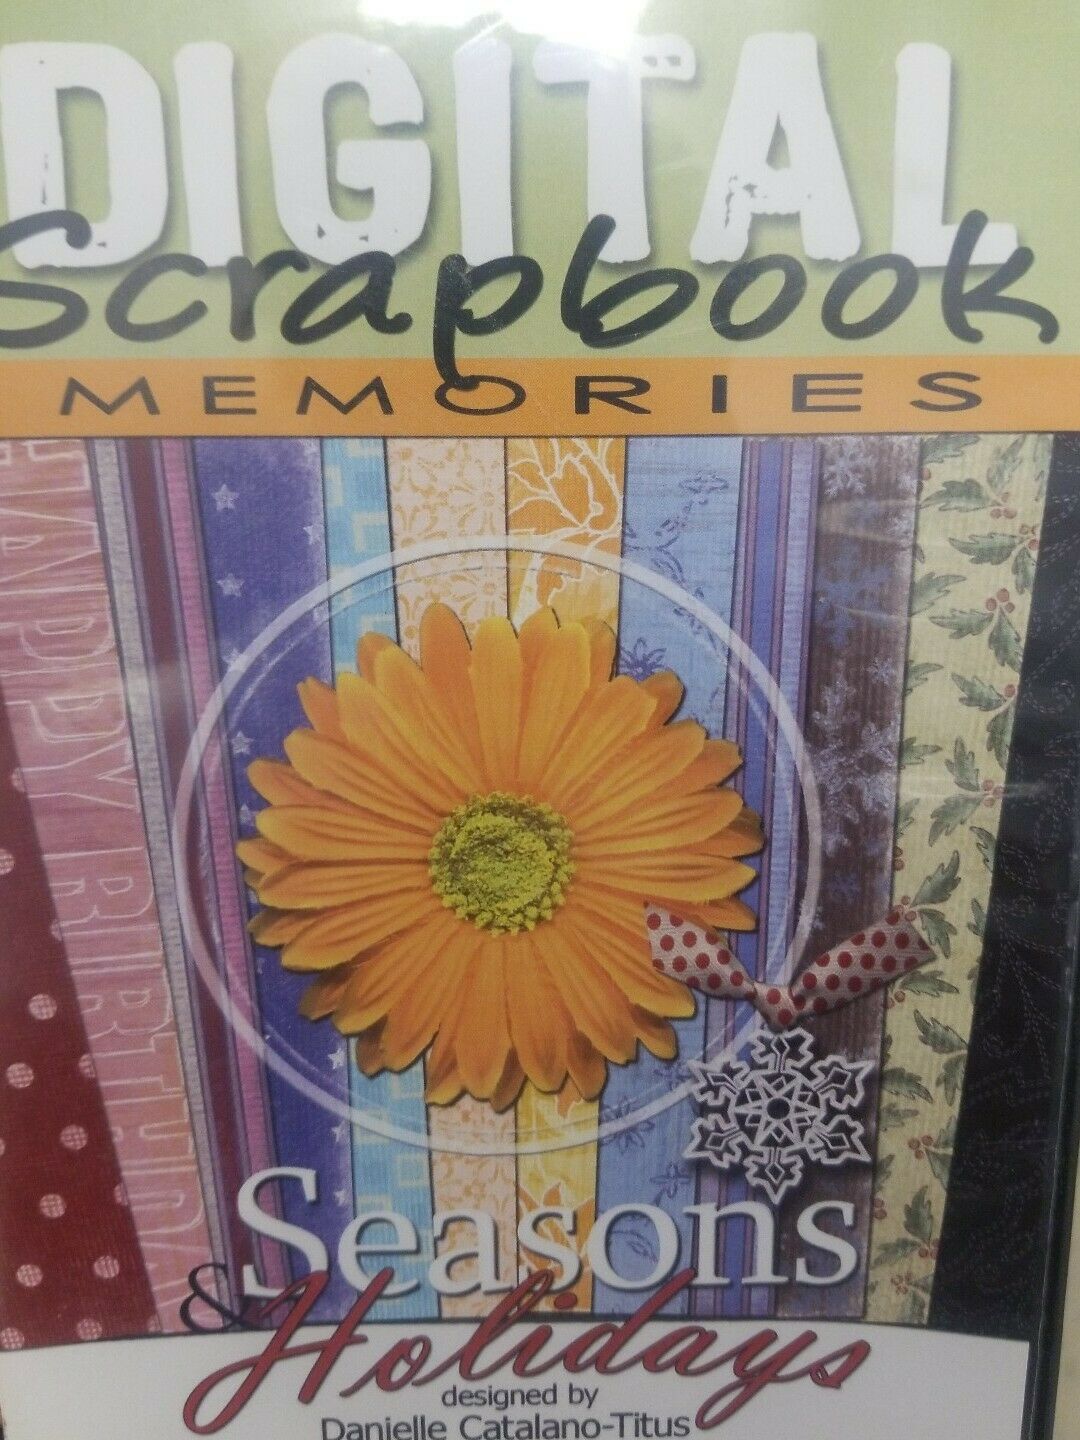 Digital Scrapbook Memories Seasons And Holidays By Danielle Catalano-titus